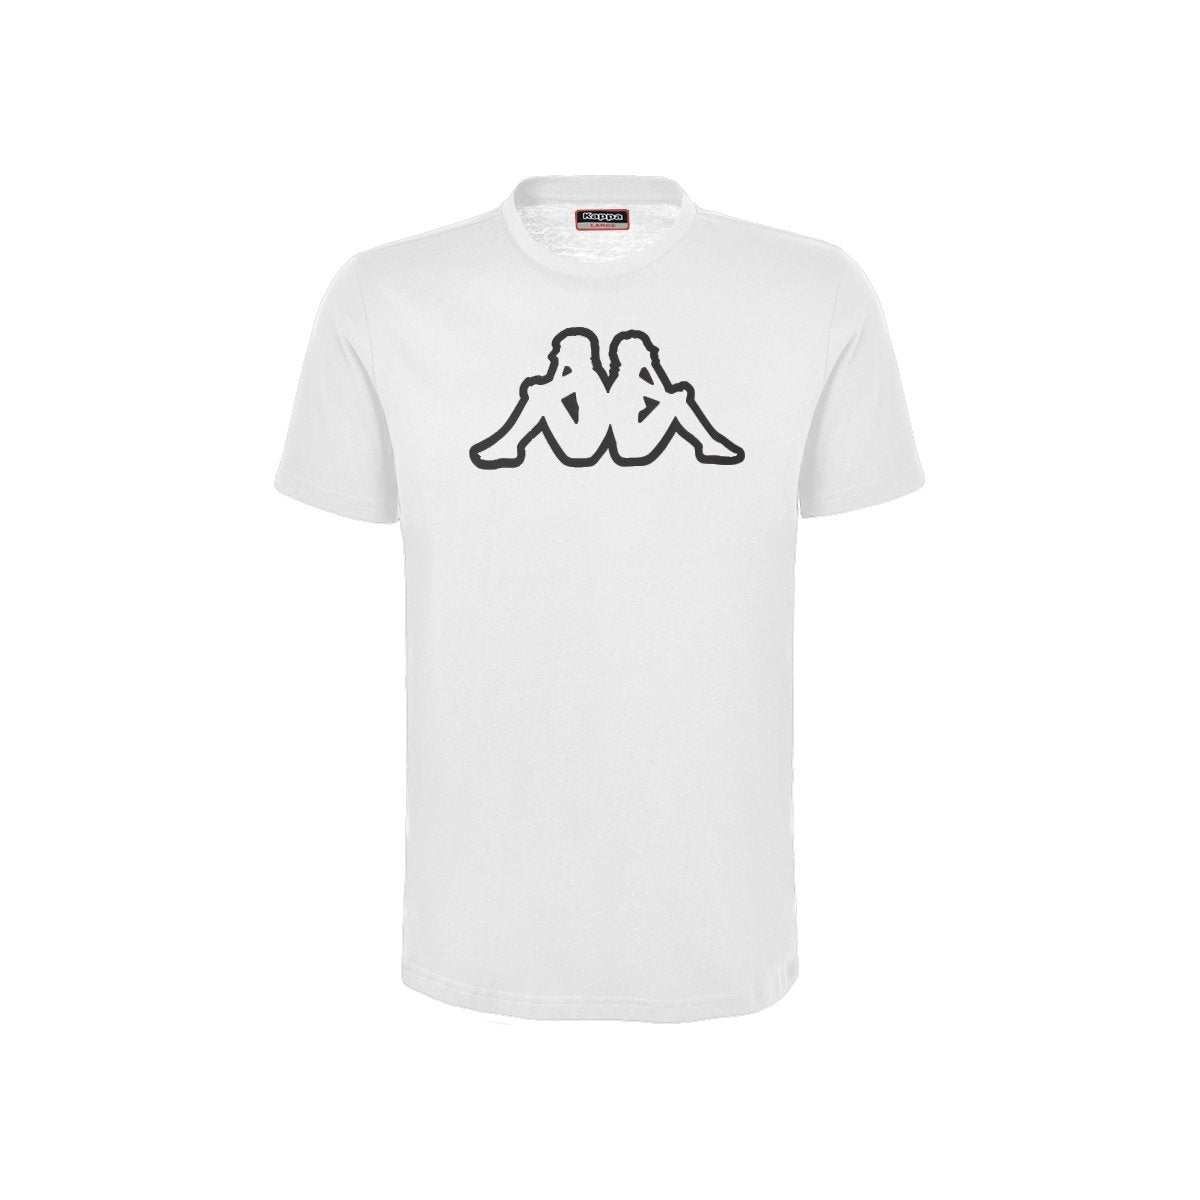 Camiseta Cromen blanco hombre - Imagen 1